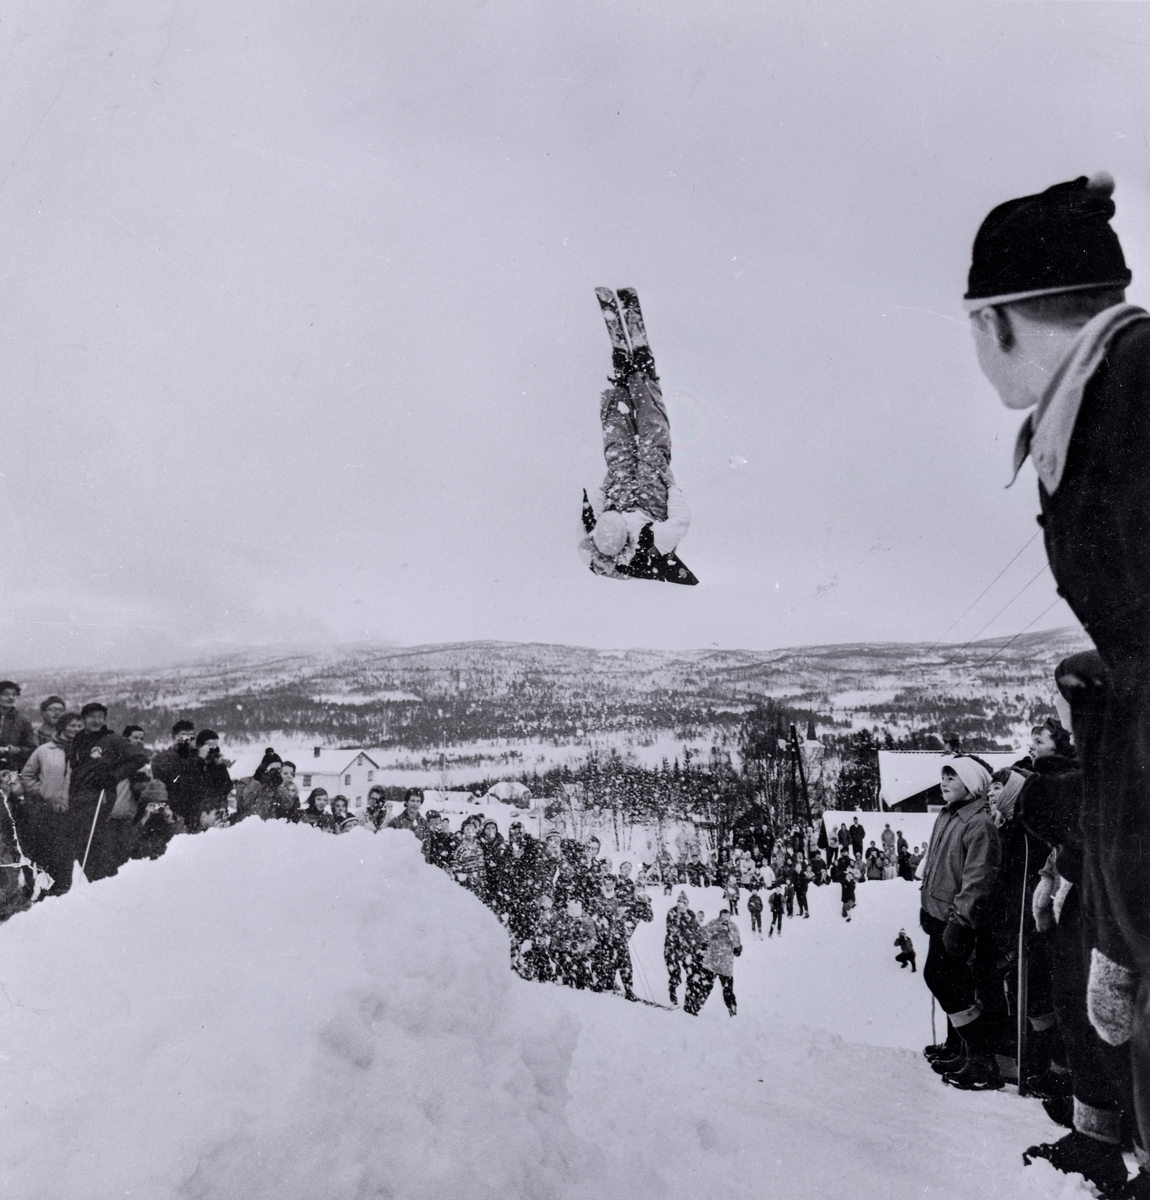 Kongsberg skier Birger Ruud doing a salto